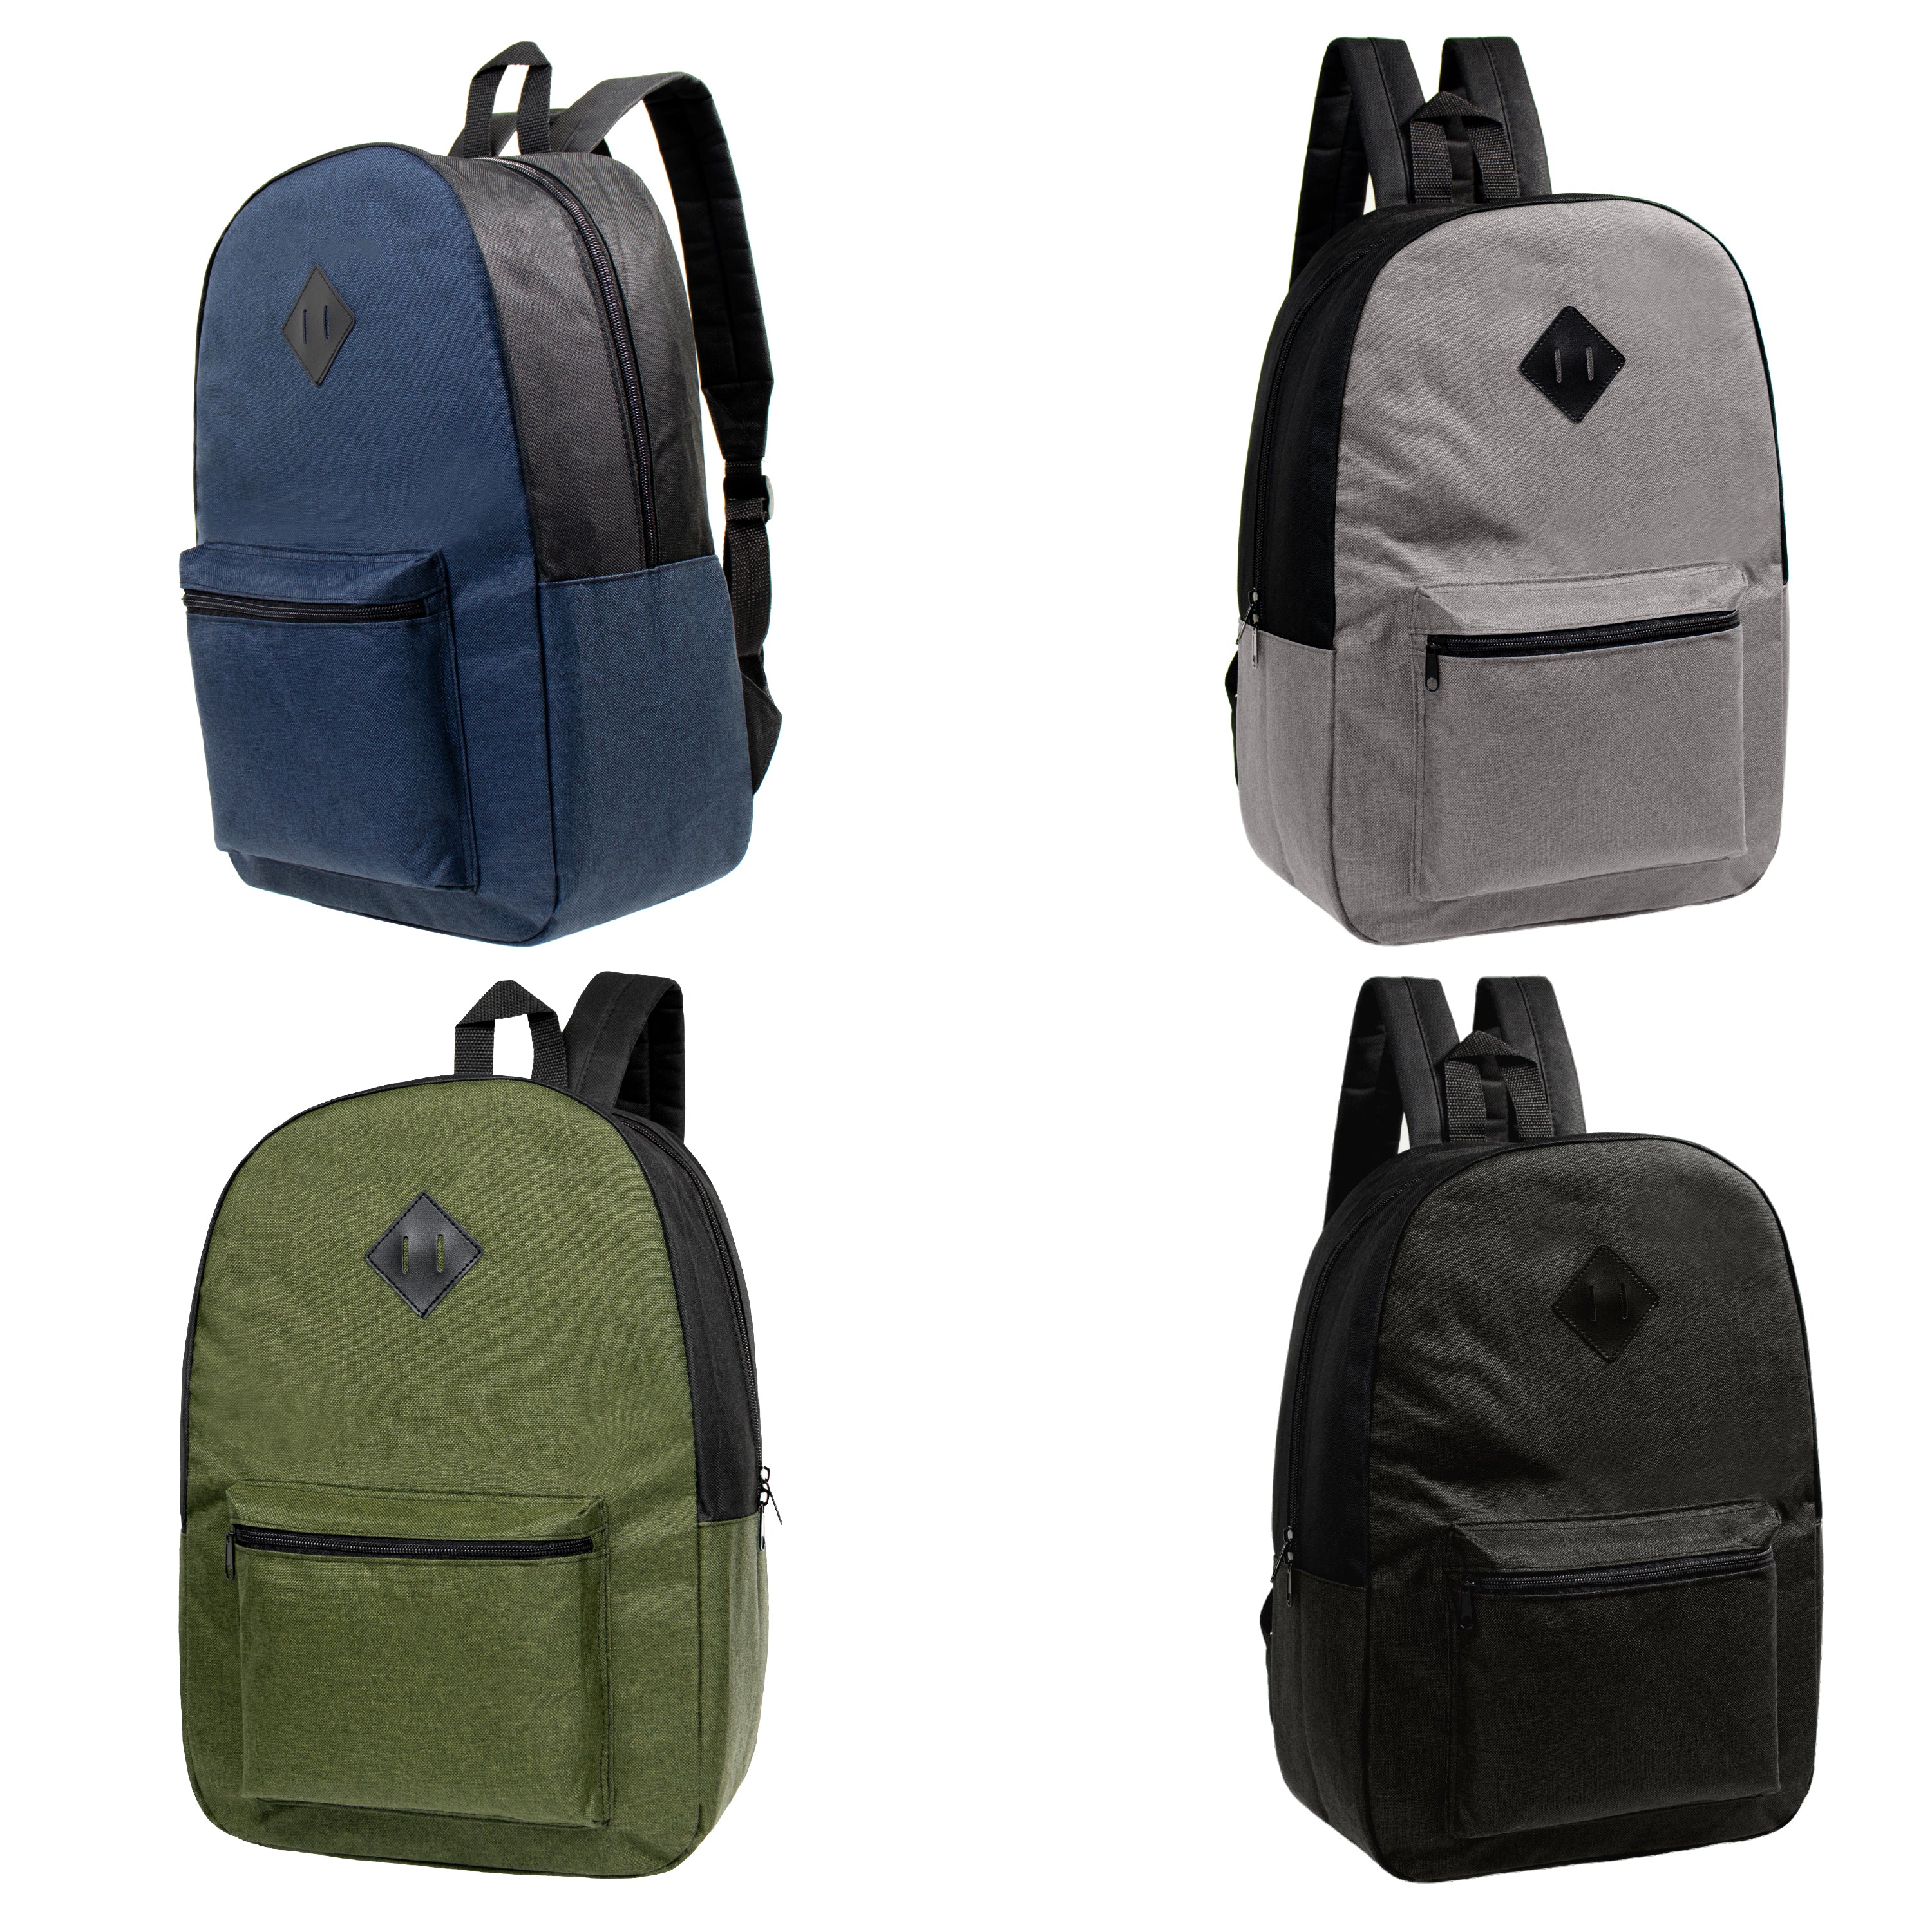 12 Bulk 17" Backpacks Diamond Patch in Assorted Dark Colors & 12 Wholesale School Supplies Kits